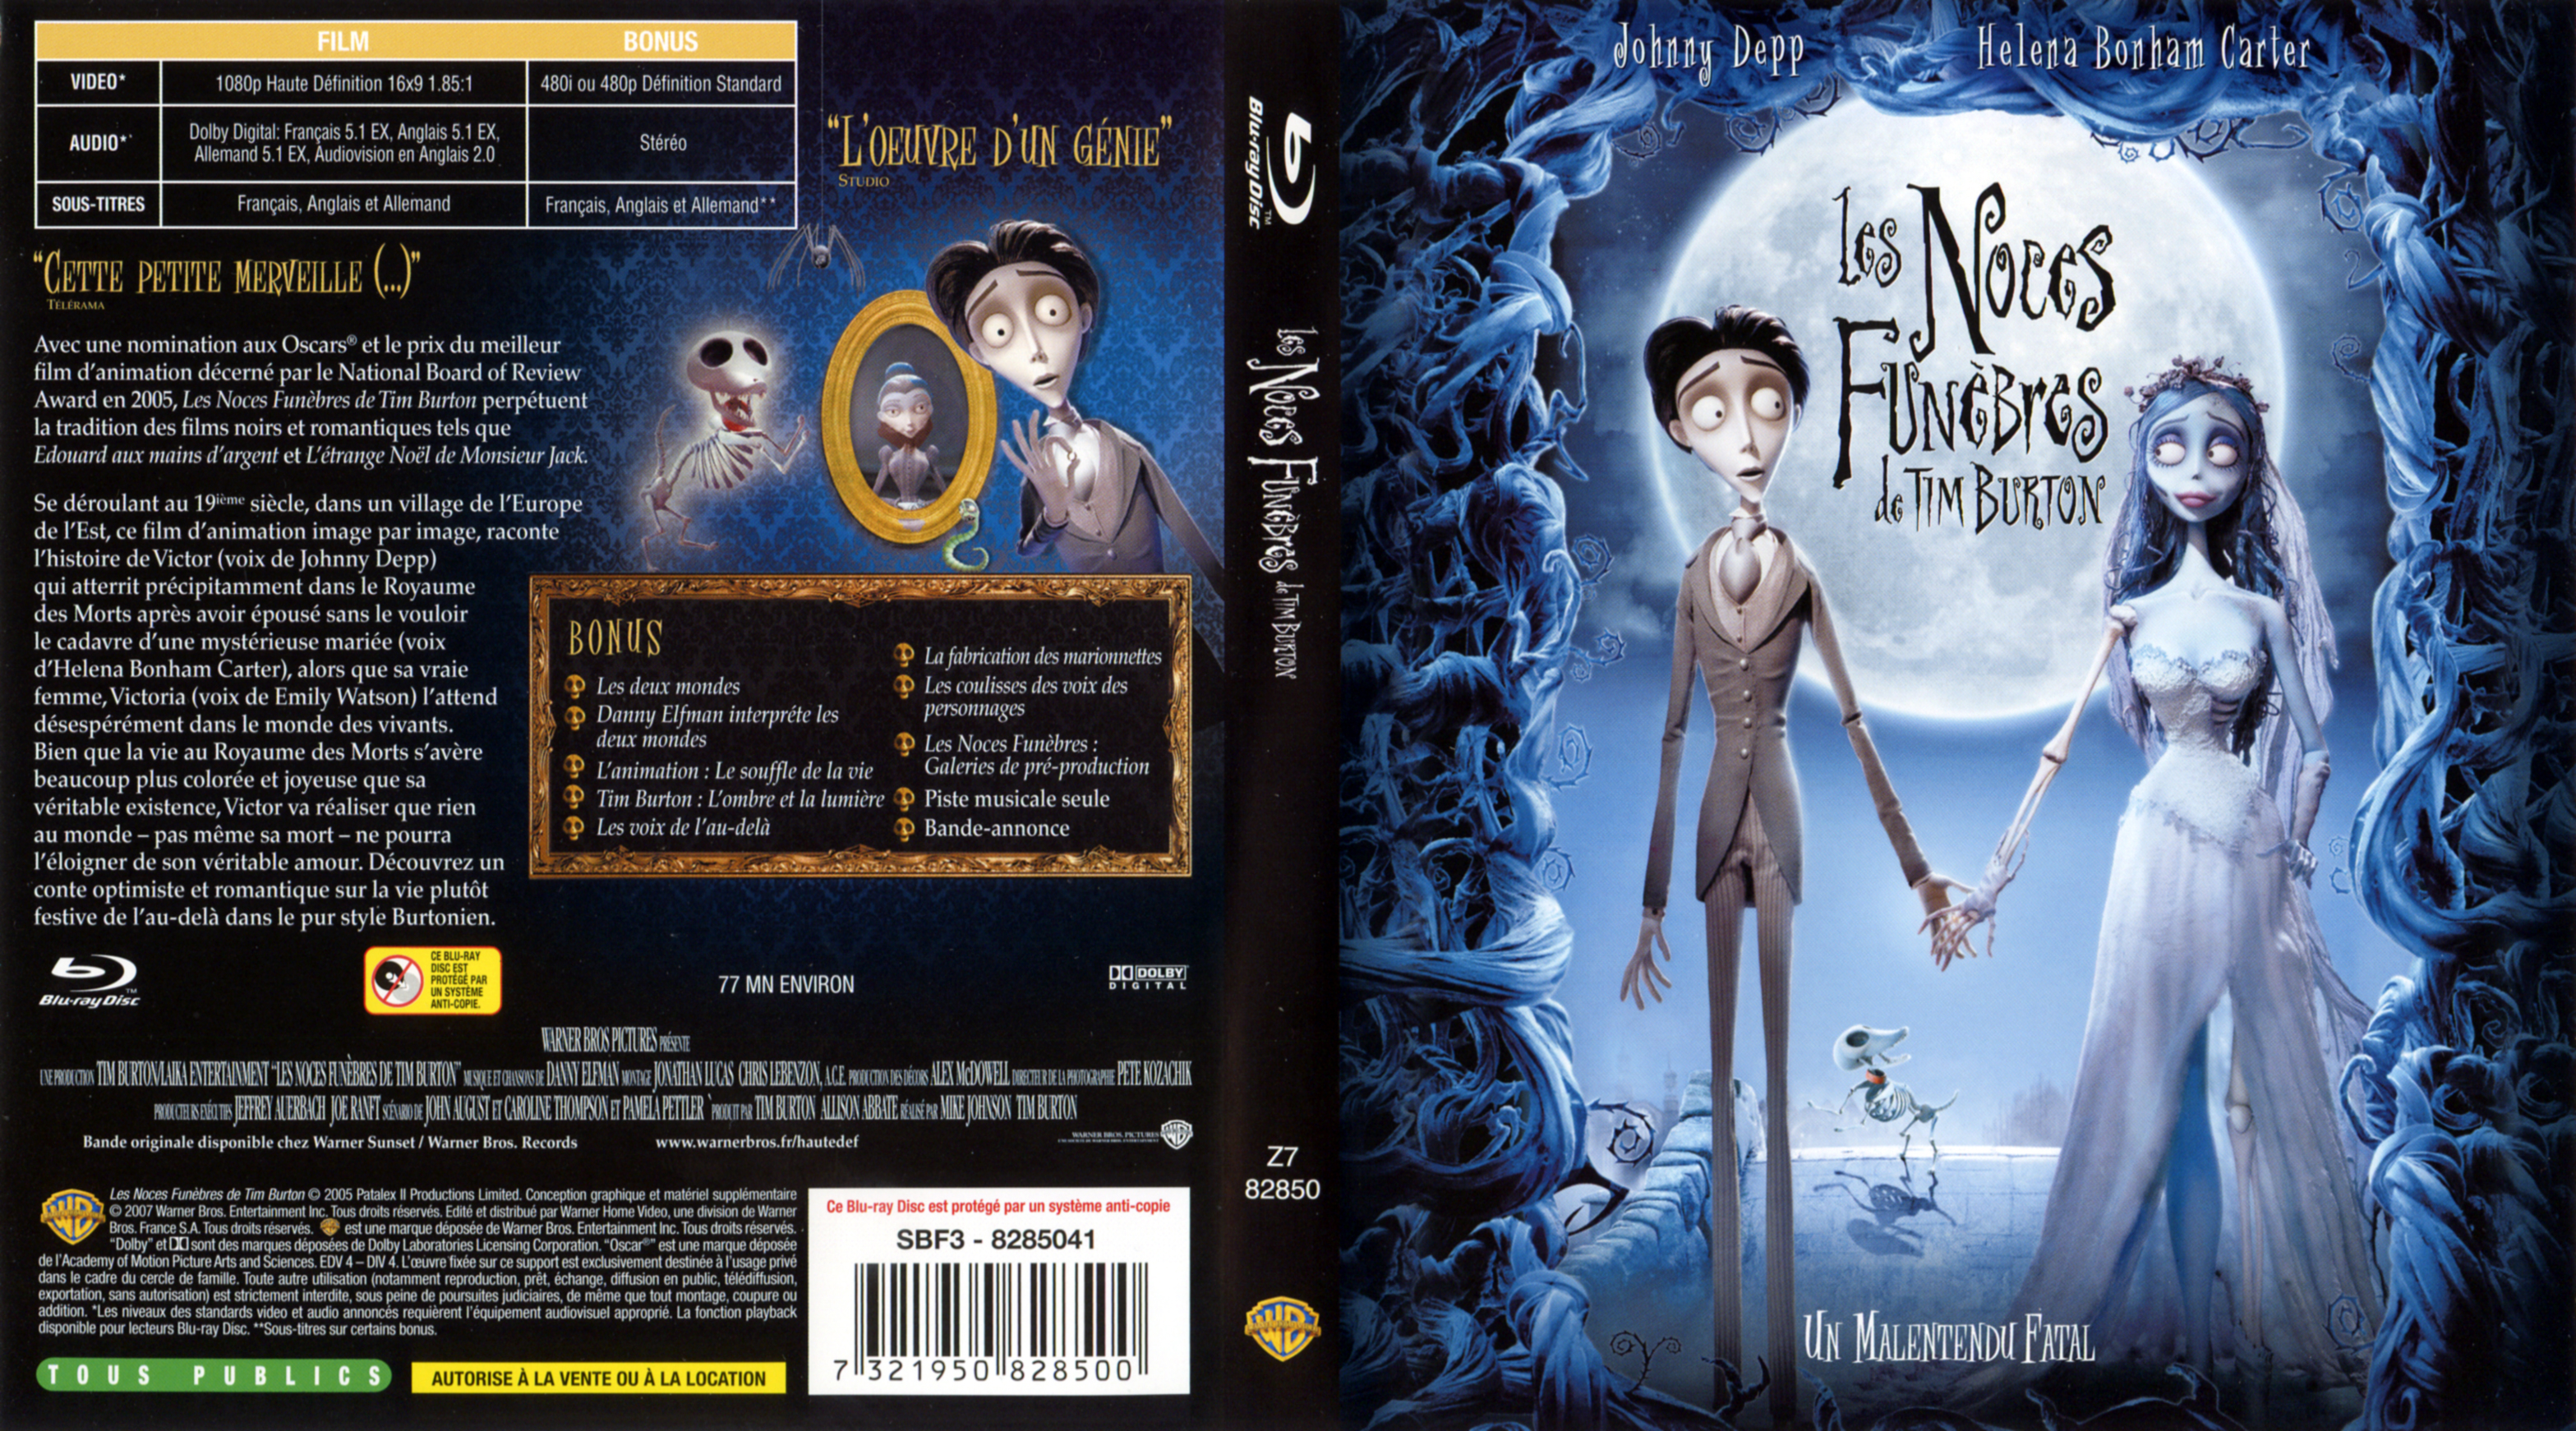 Jaquette DVD Les noces funebres (BLU-RAY) v2